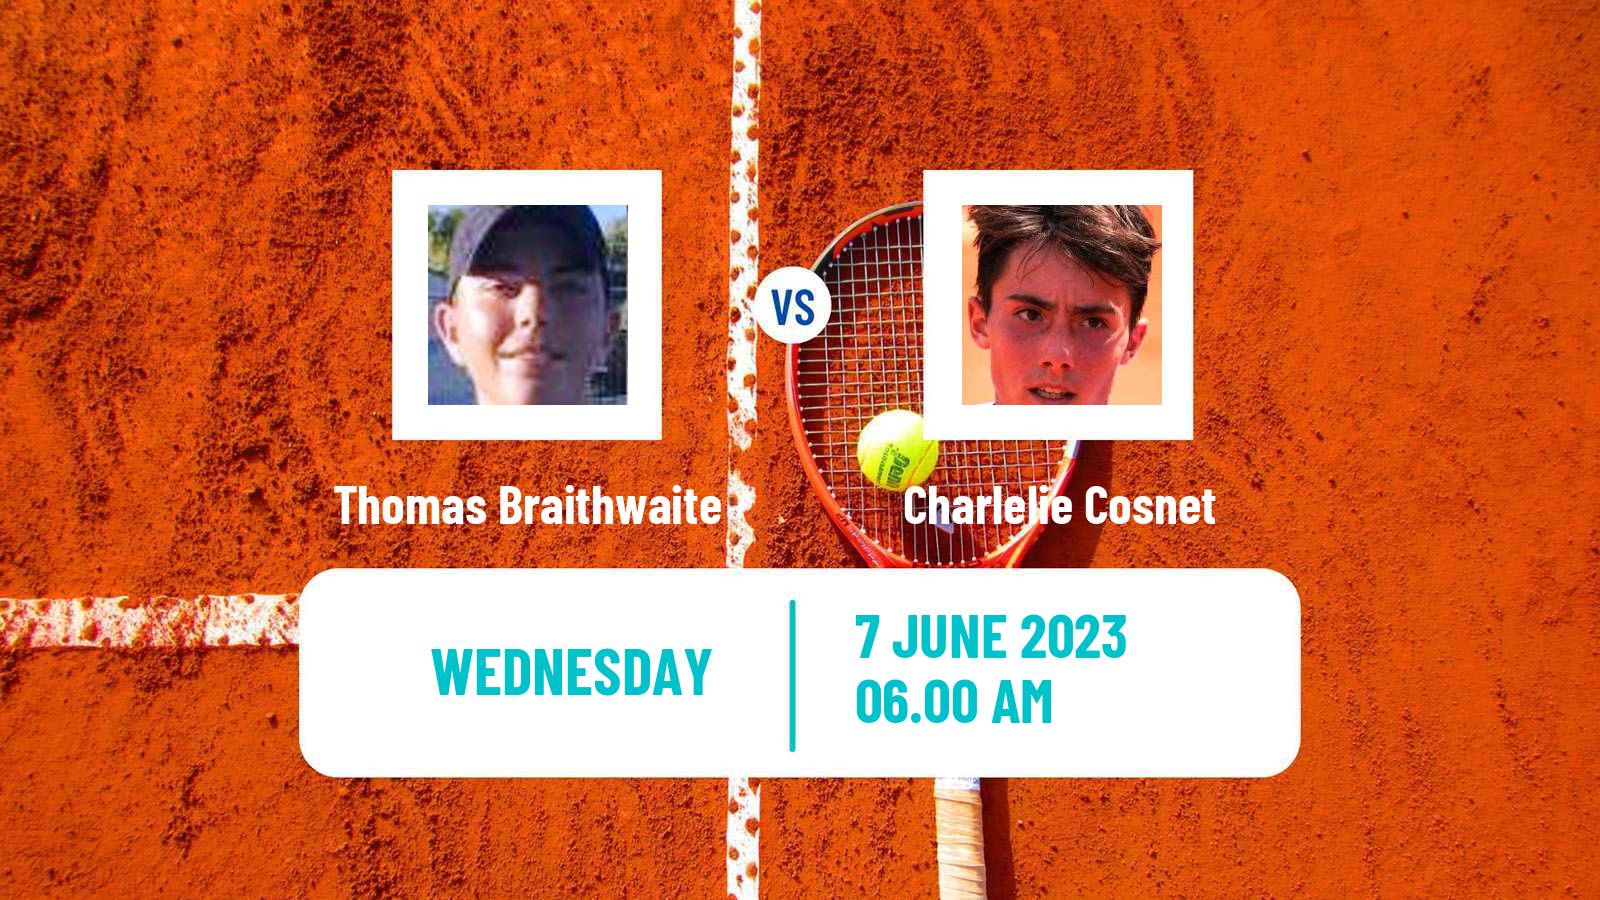 Tennis ITF M15 Monastir 23 Men Thomas Braithwaite - Charlelie Cosnet